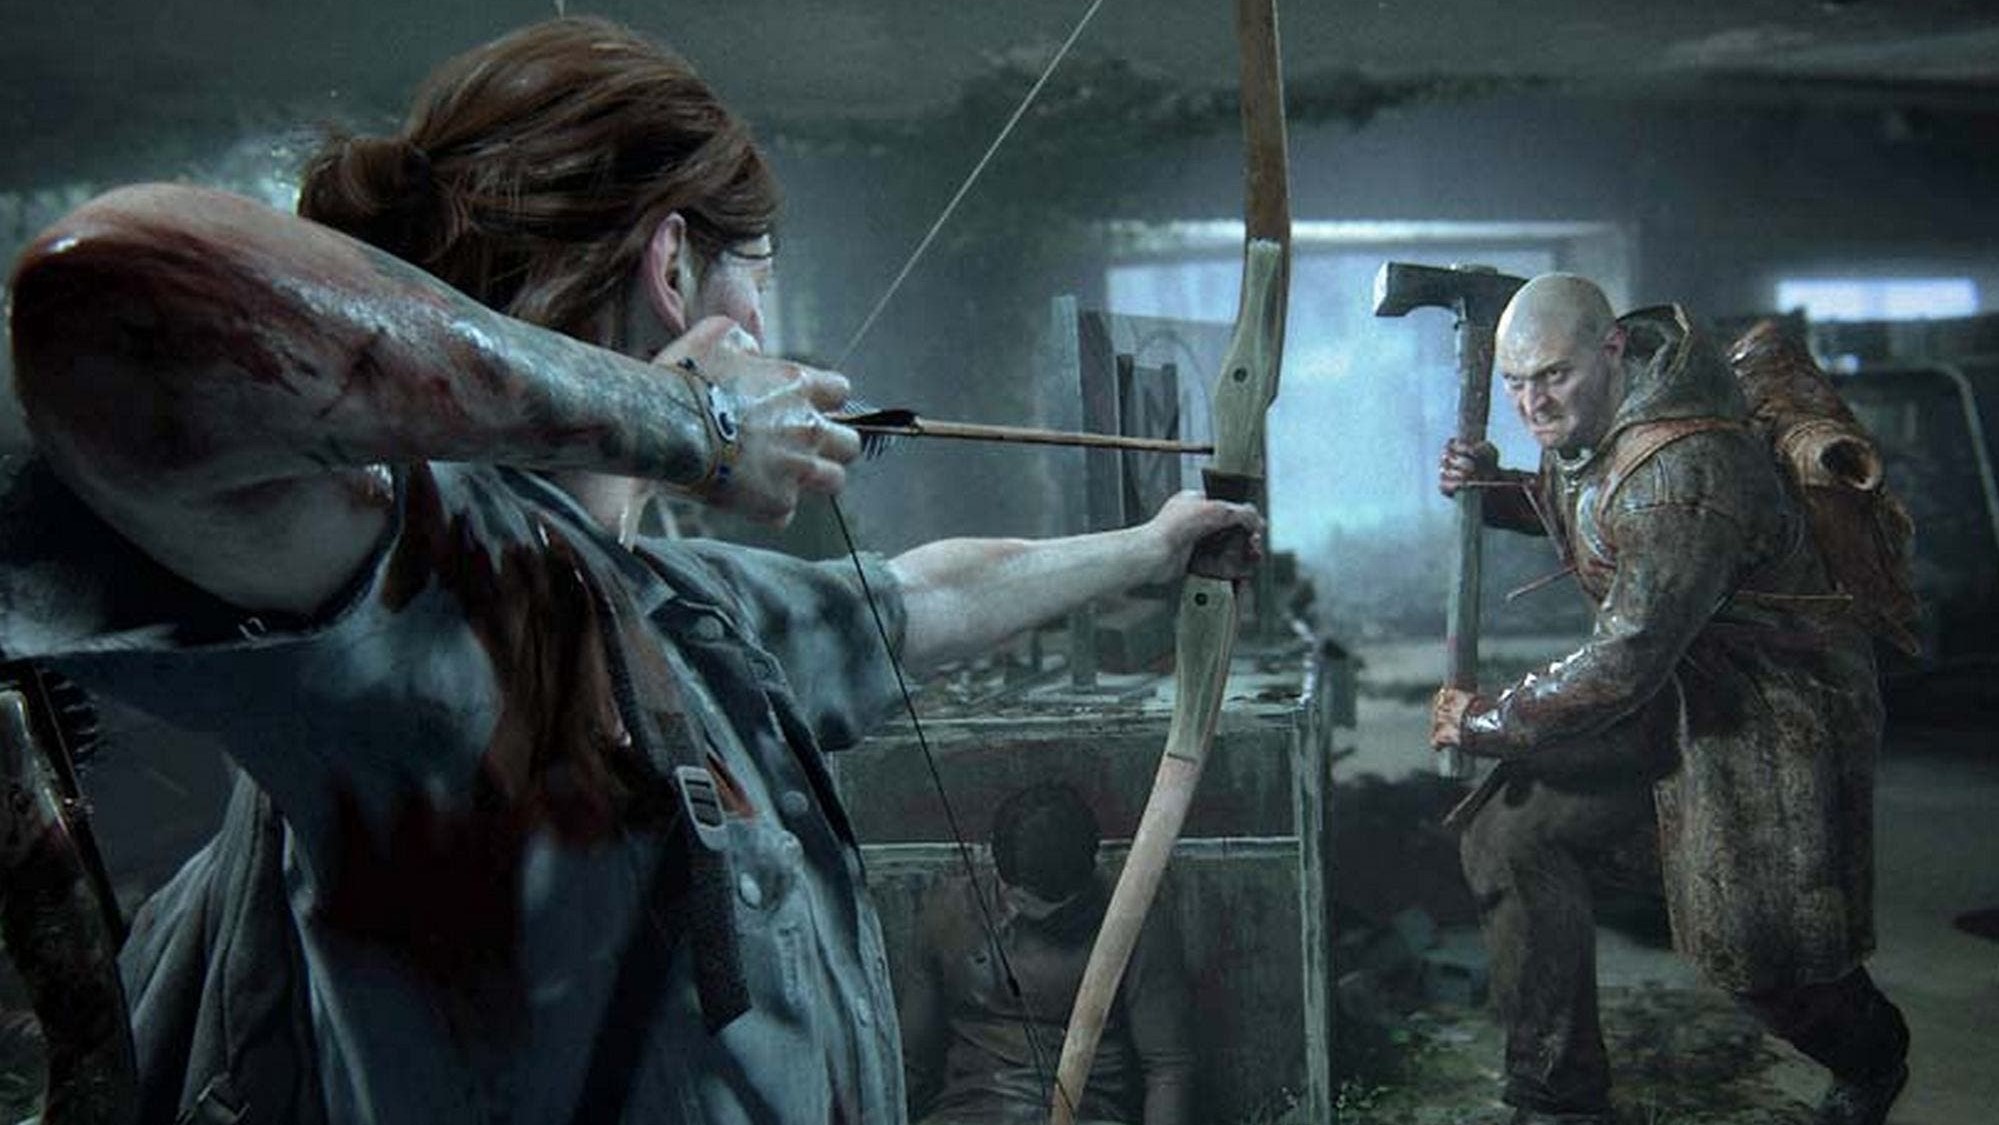 The Last of Us II ön siparişler iptal edildi!